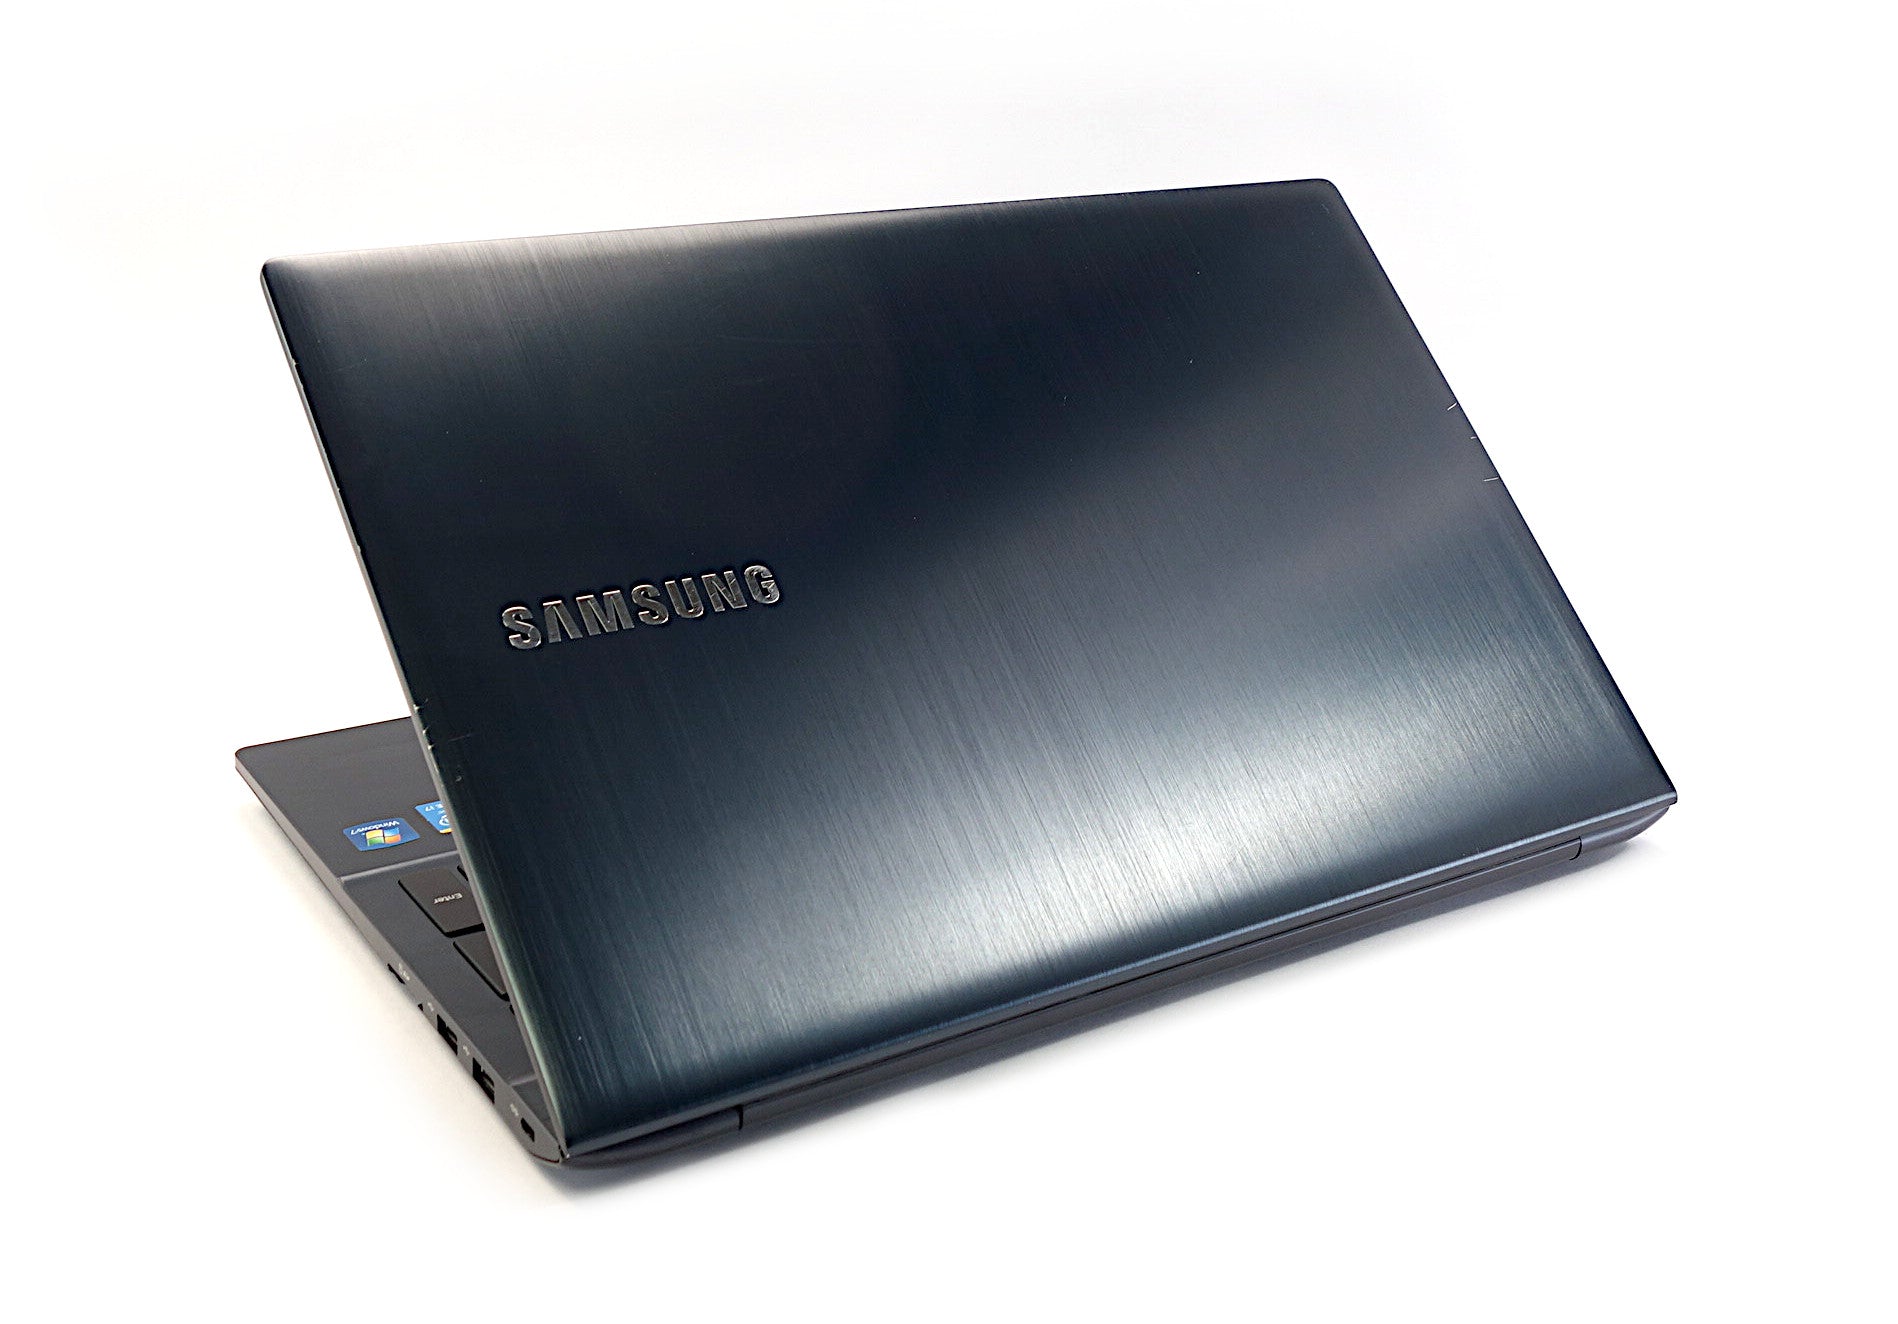 Samsung 870Z Laptop, 15.6" Intel Core i7, 8GB RAM 250GB SSD